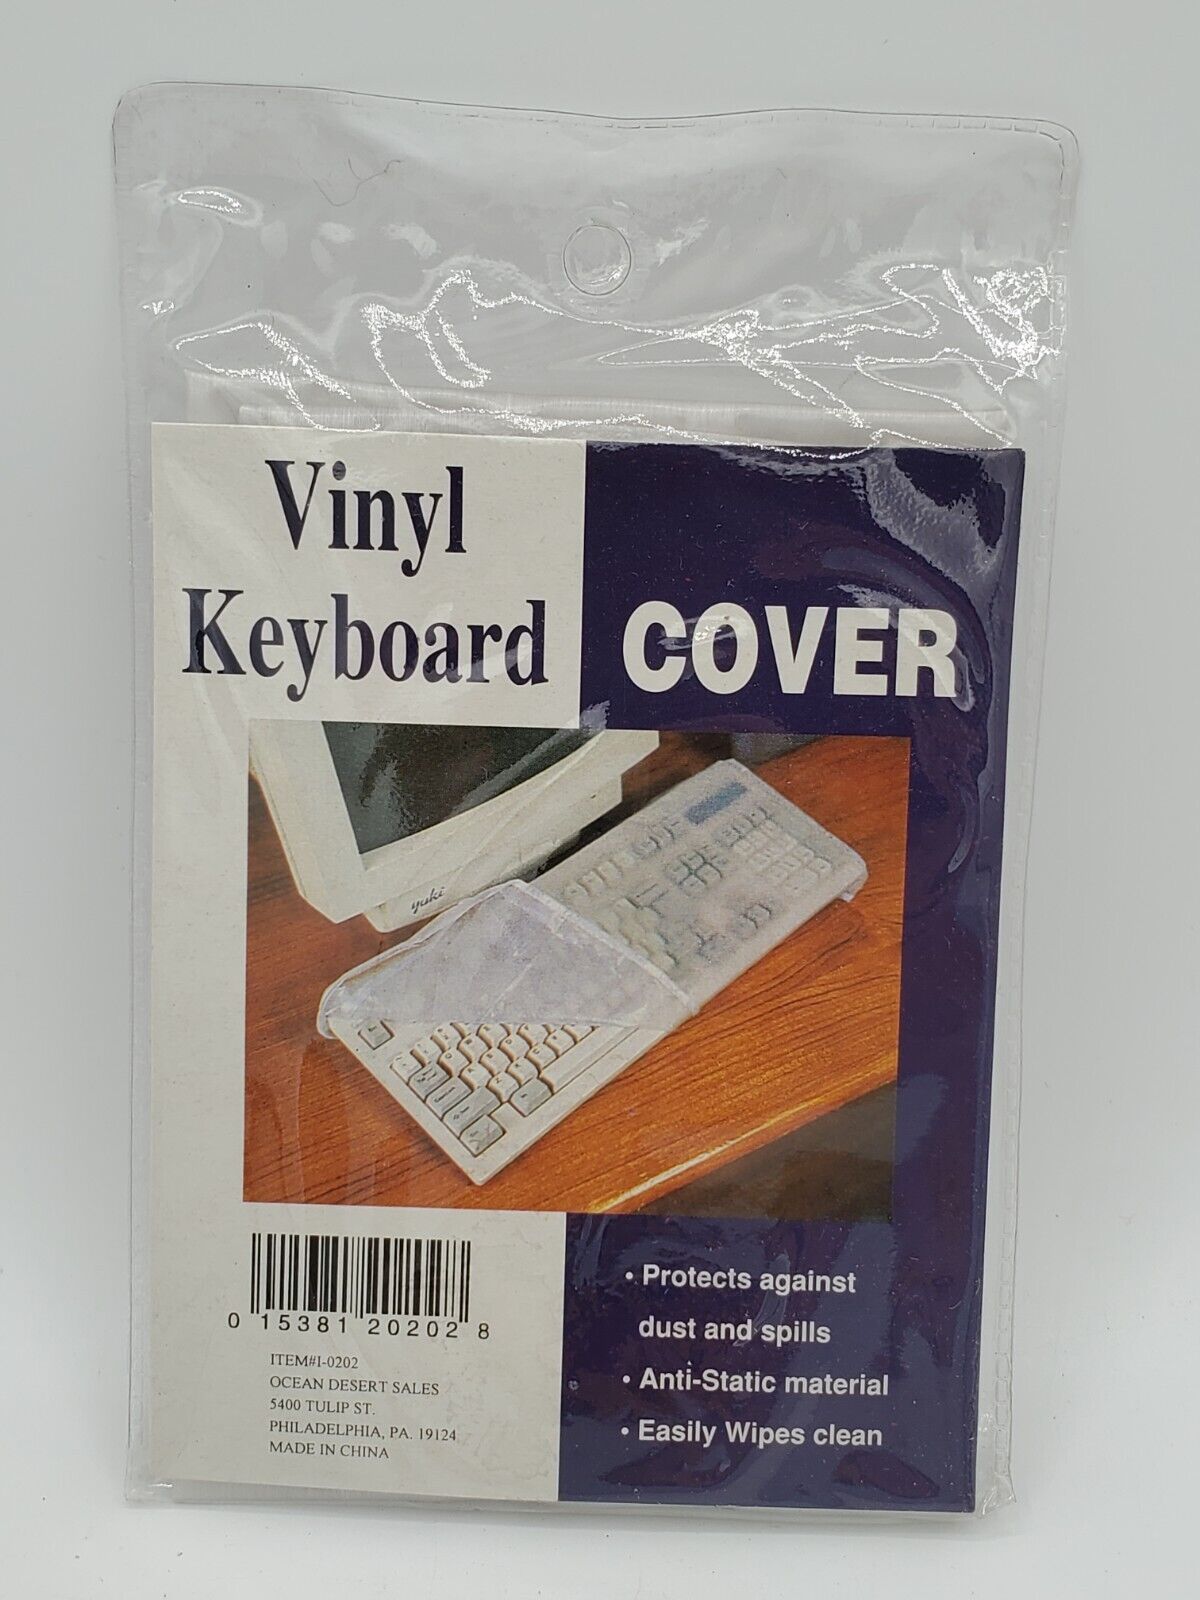 Vintage Vinyl Keyboard Cover Clear by Ocean Desert Sales - NEW FACTORY SEALED